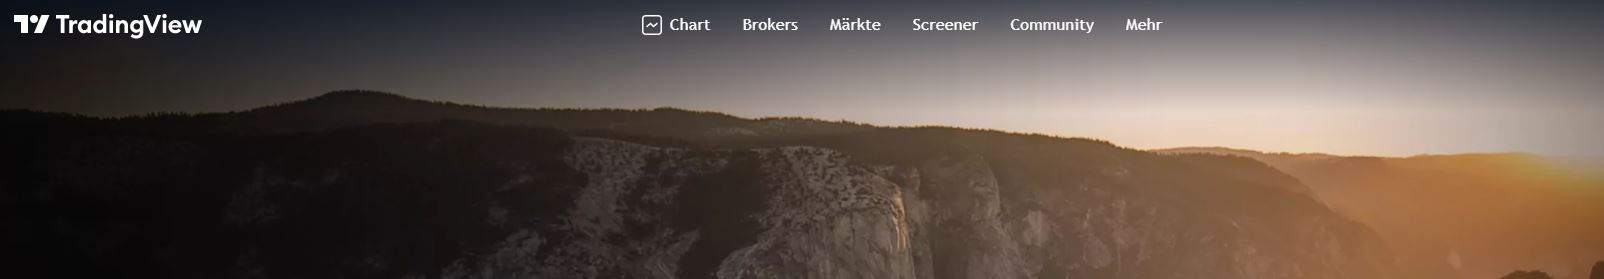 Tradingview.com: Top-Analysetool für Anleger und Trader